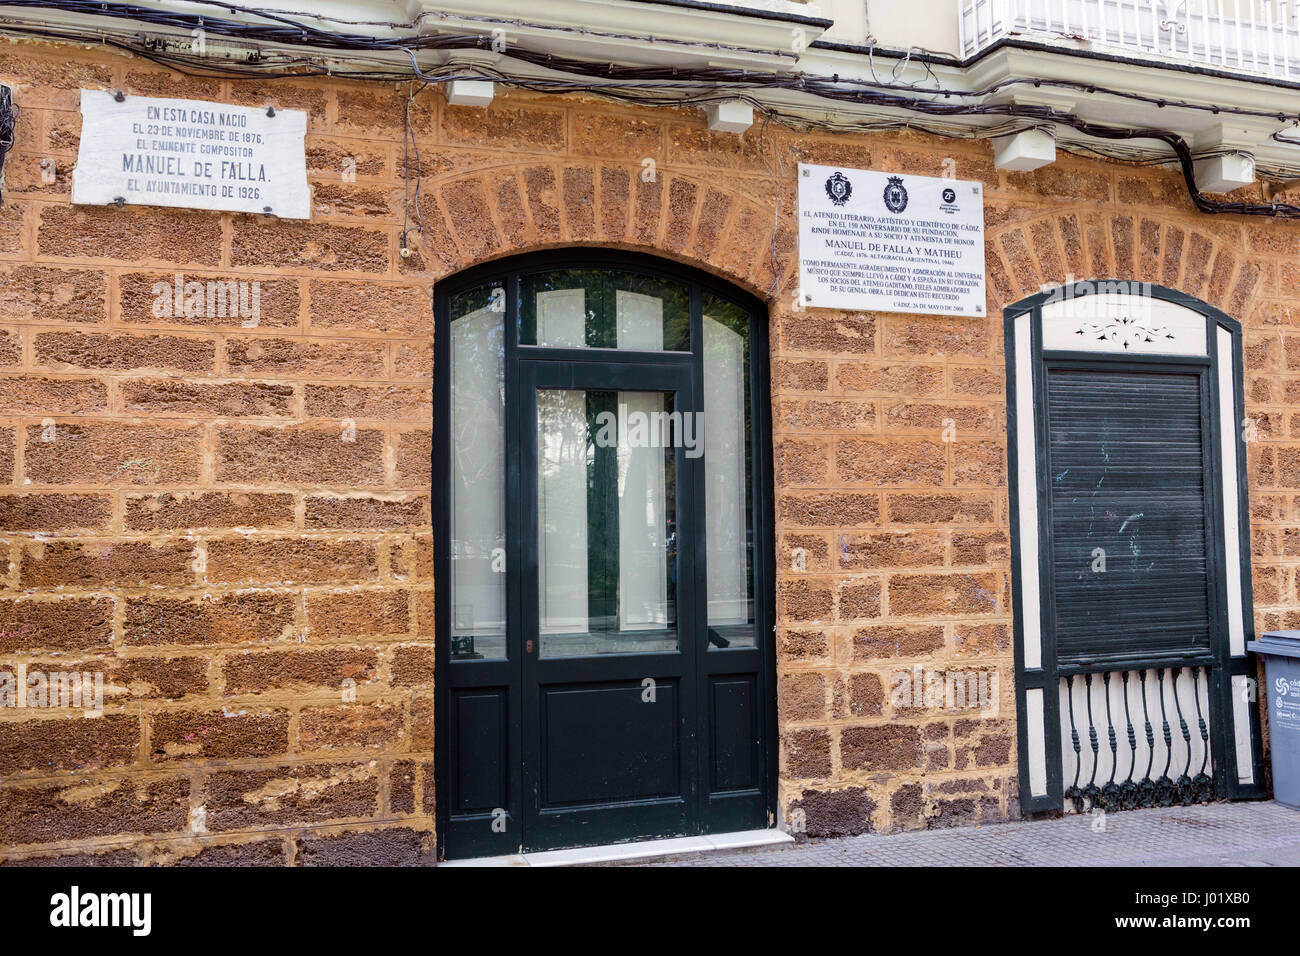 Cadiz Spain- April 1: House where born the Spanish composer Manuel de Falla on 23 November 1876, registration indicates in marble indicates its conmem Stock Photo